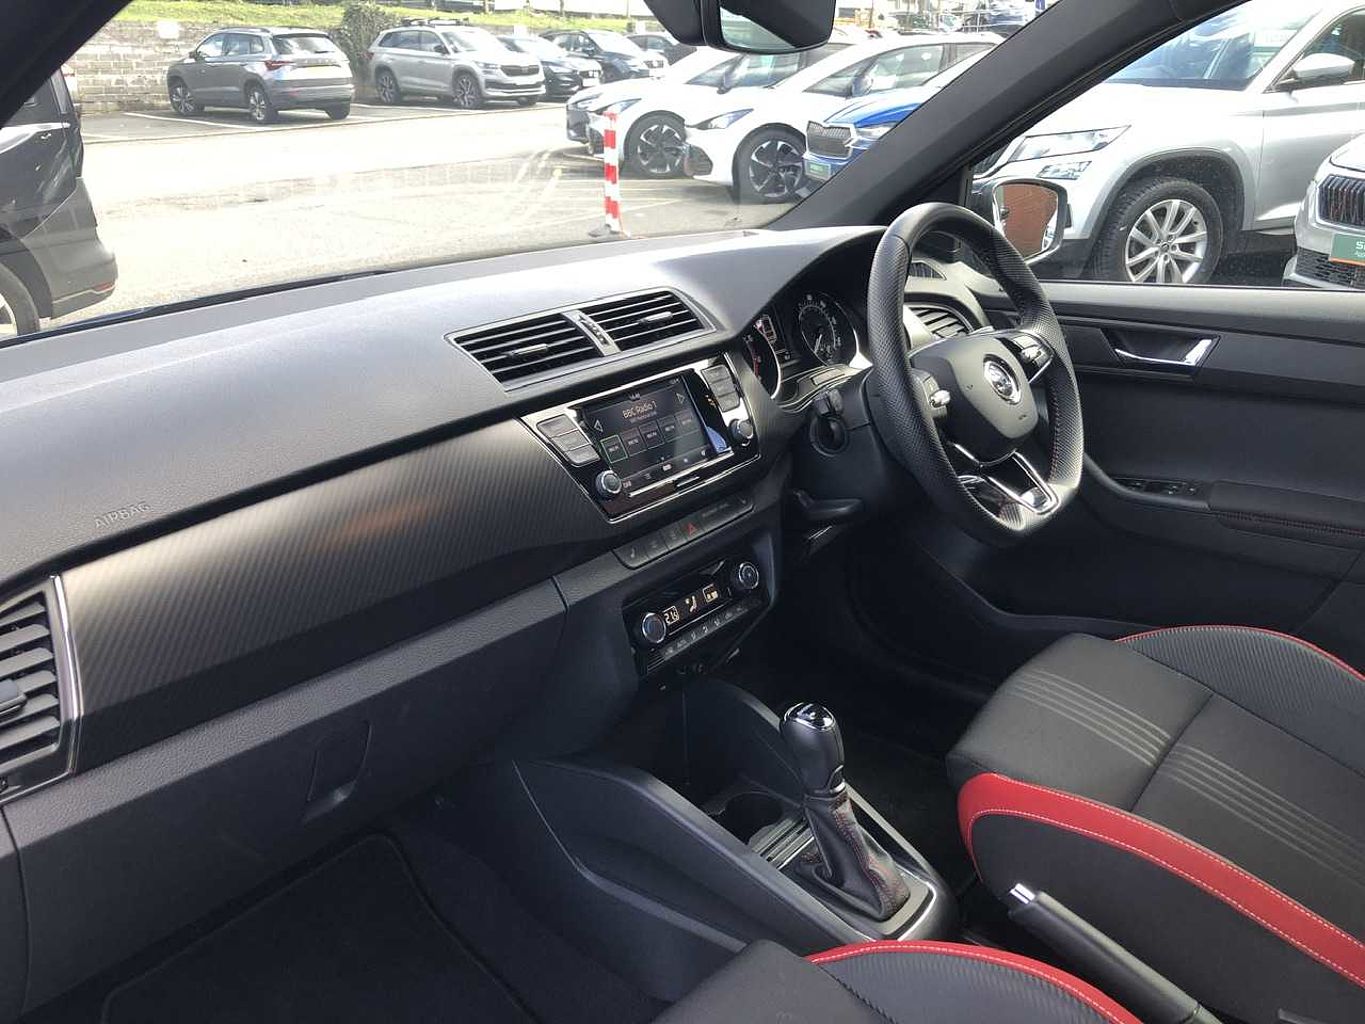 SKODA Fabia 1.0 TSI Monte Carlo (95PS) DS 5-Dr Hatchback